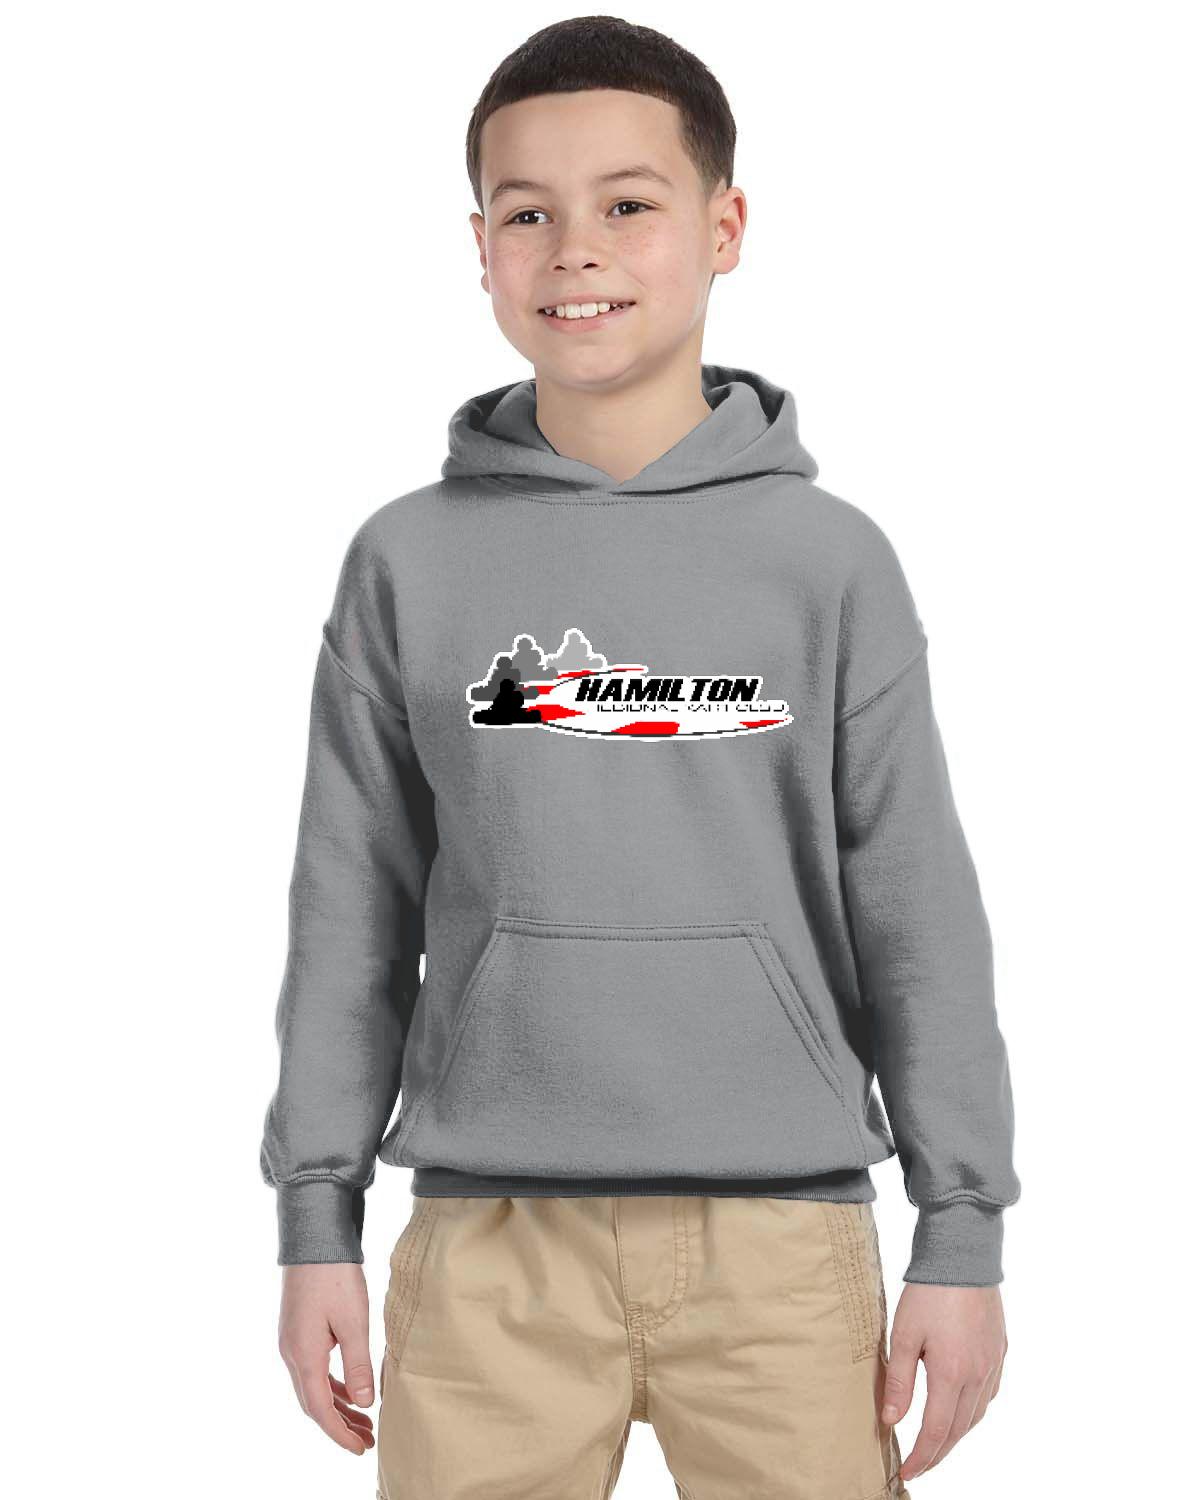 Hamilton Regional Kart Club Kid's Hoodie